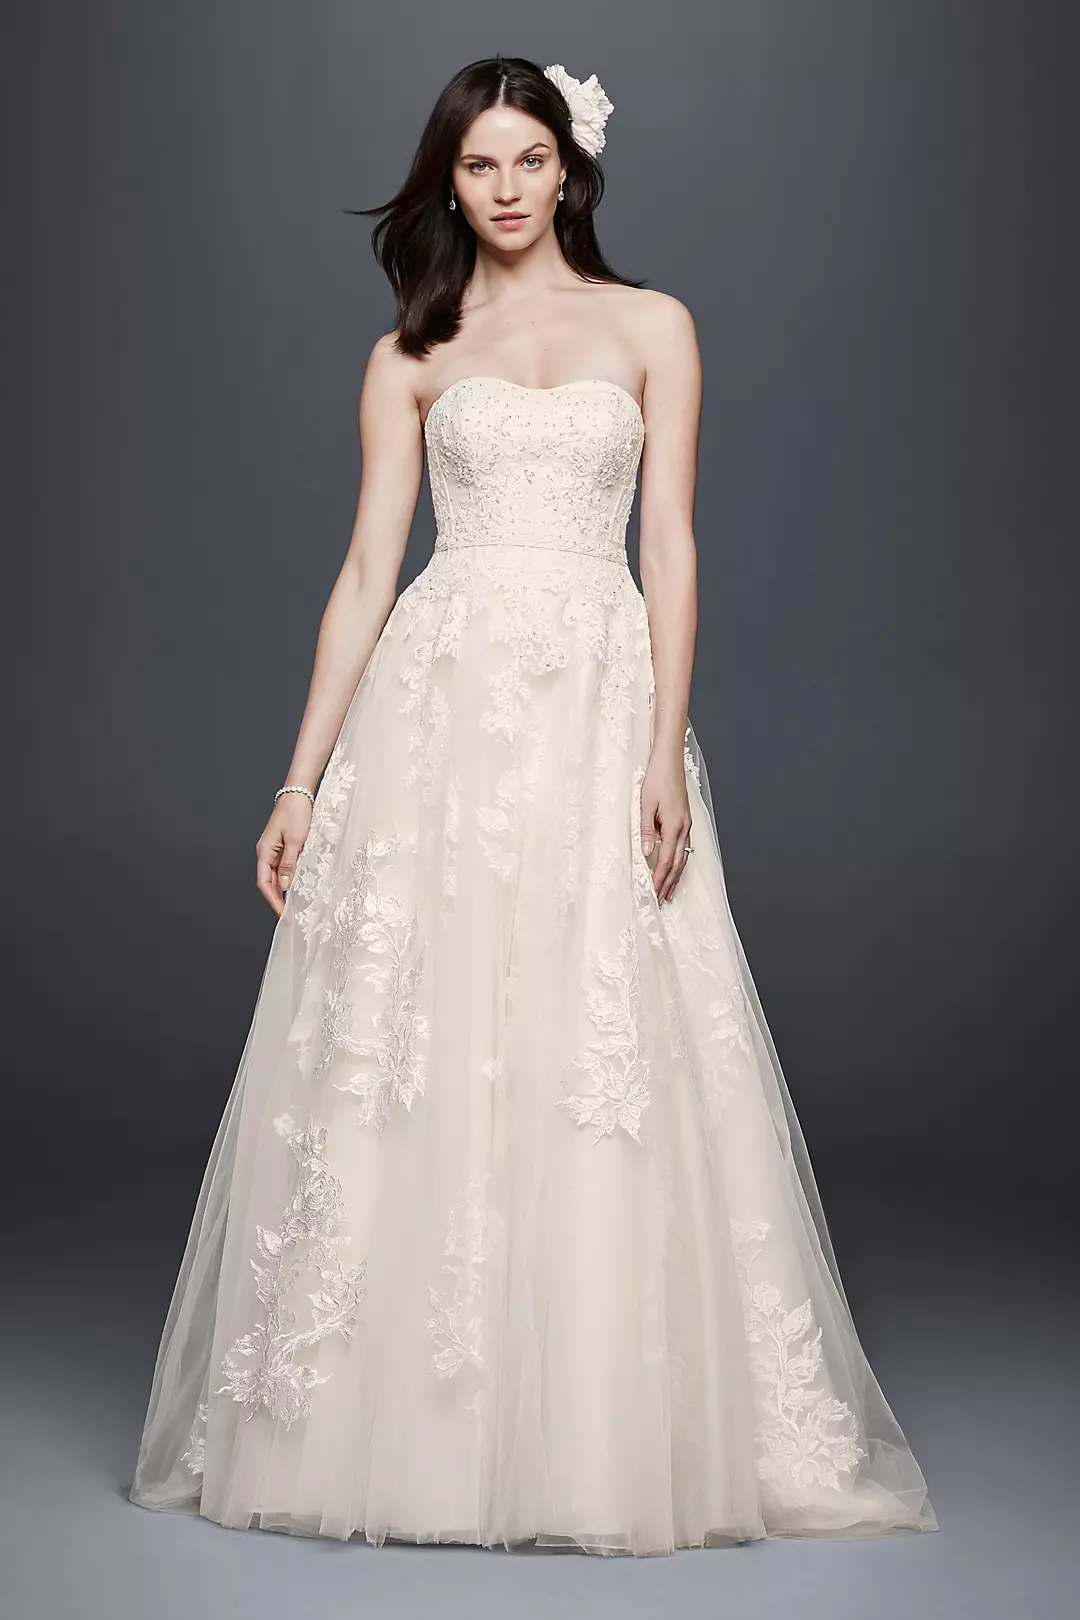 Beaded Sweetheart Tulle Ball Gown Wedding Dress Image